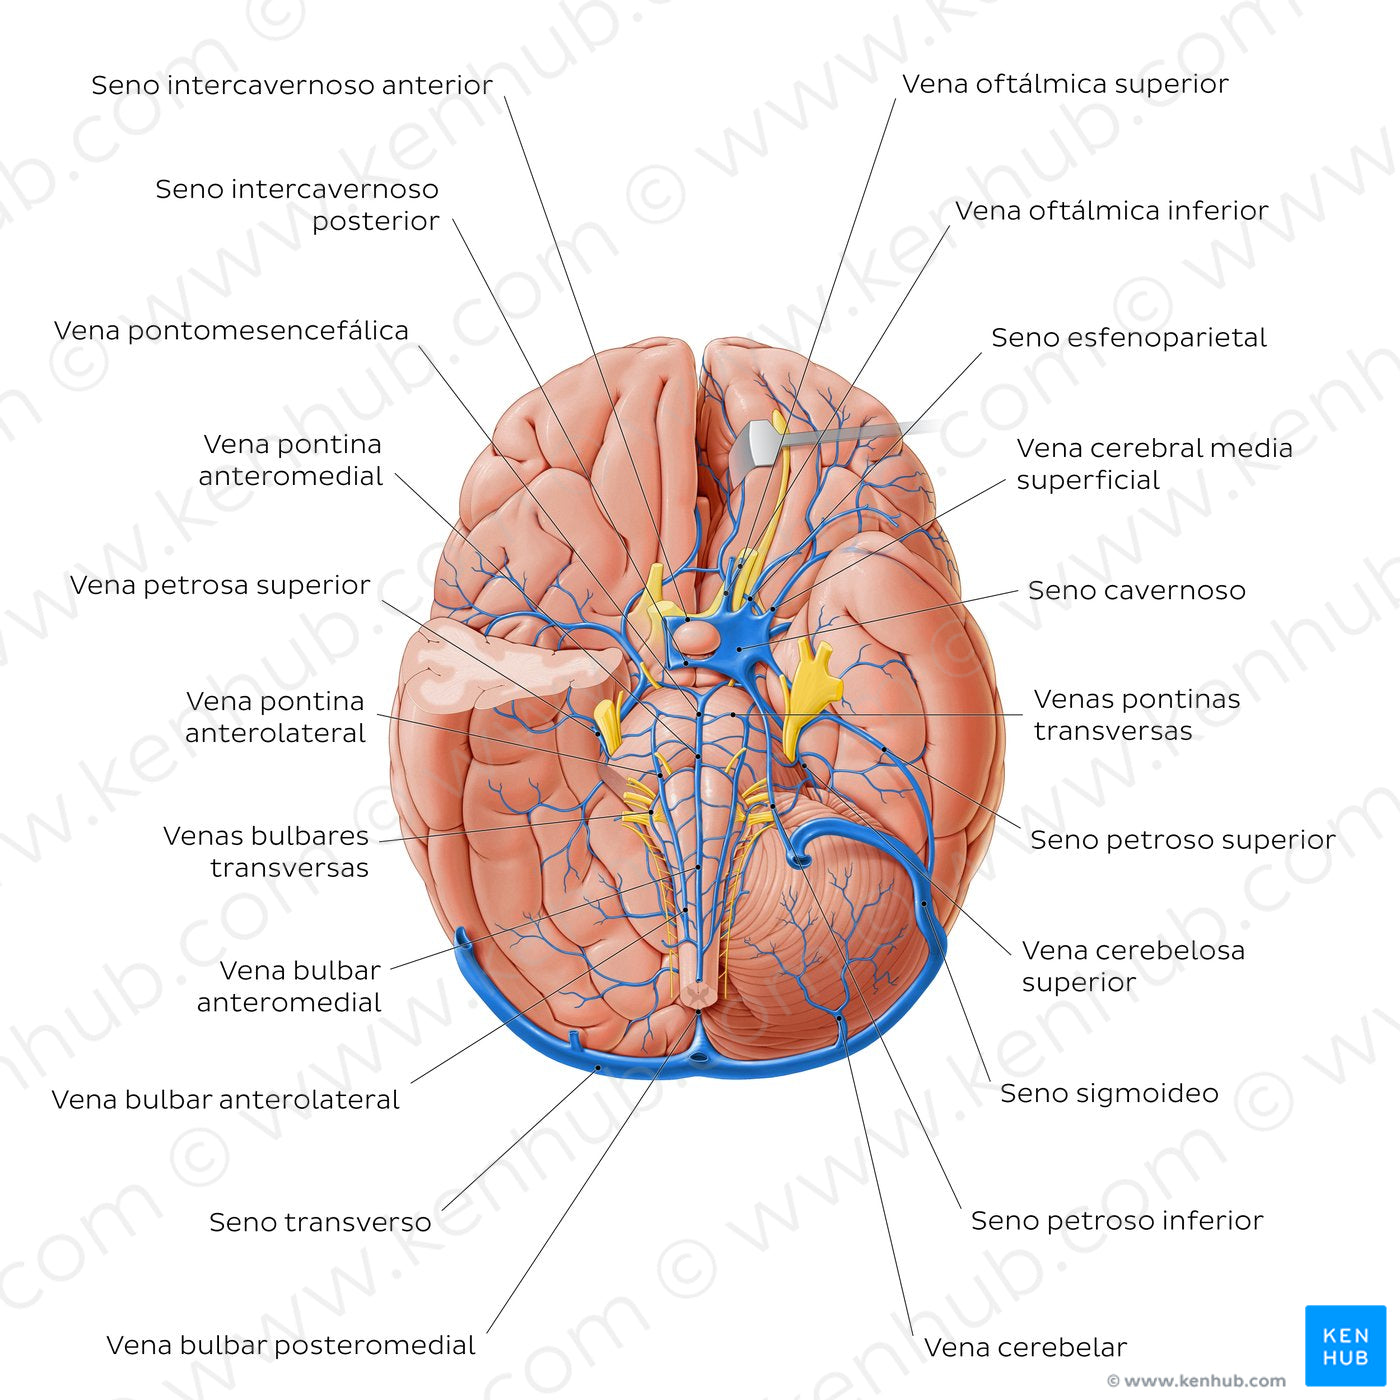 Veins of the brainstem and cerebellum - Basal view (Spanish)